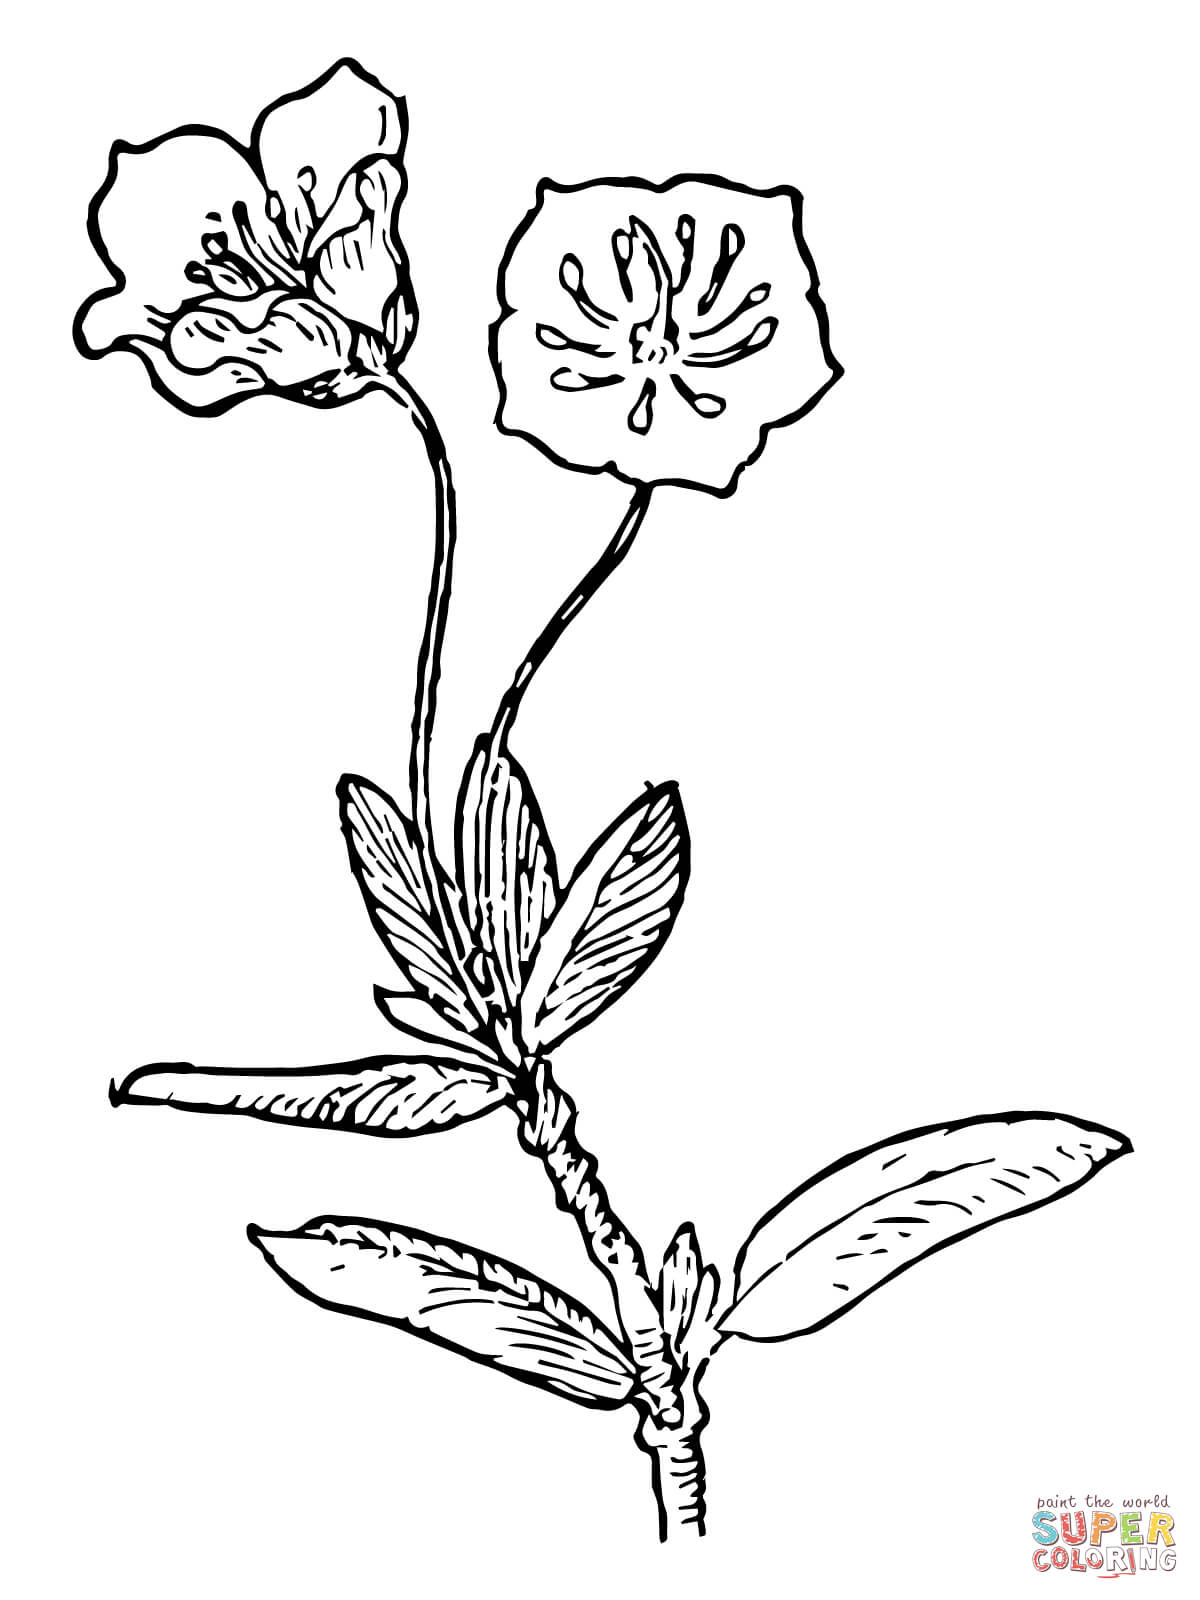 Kalmia Microphylla 或来自月桂树的沼泽月桂树